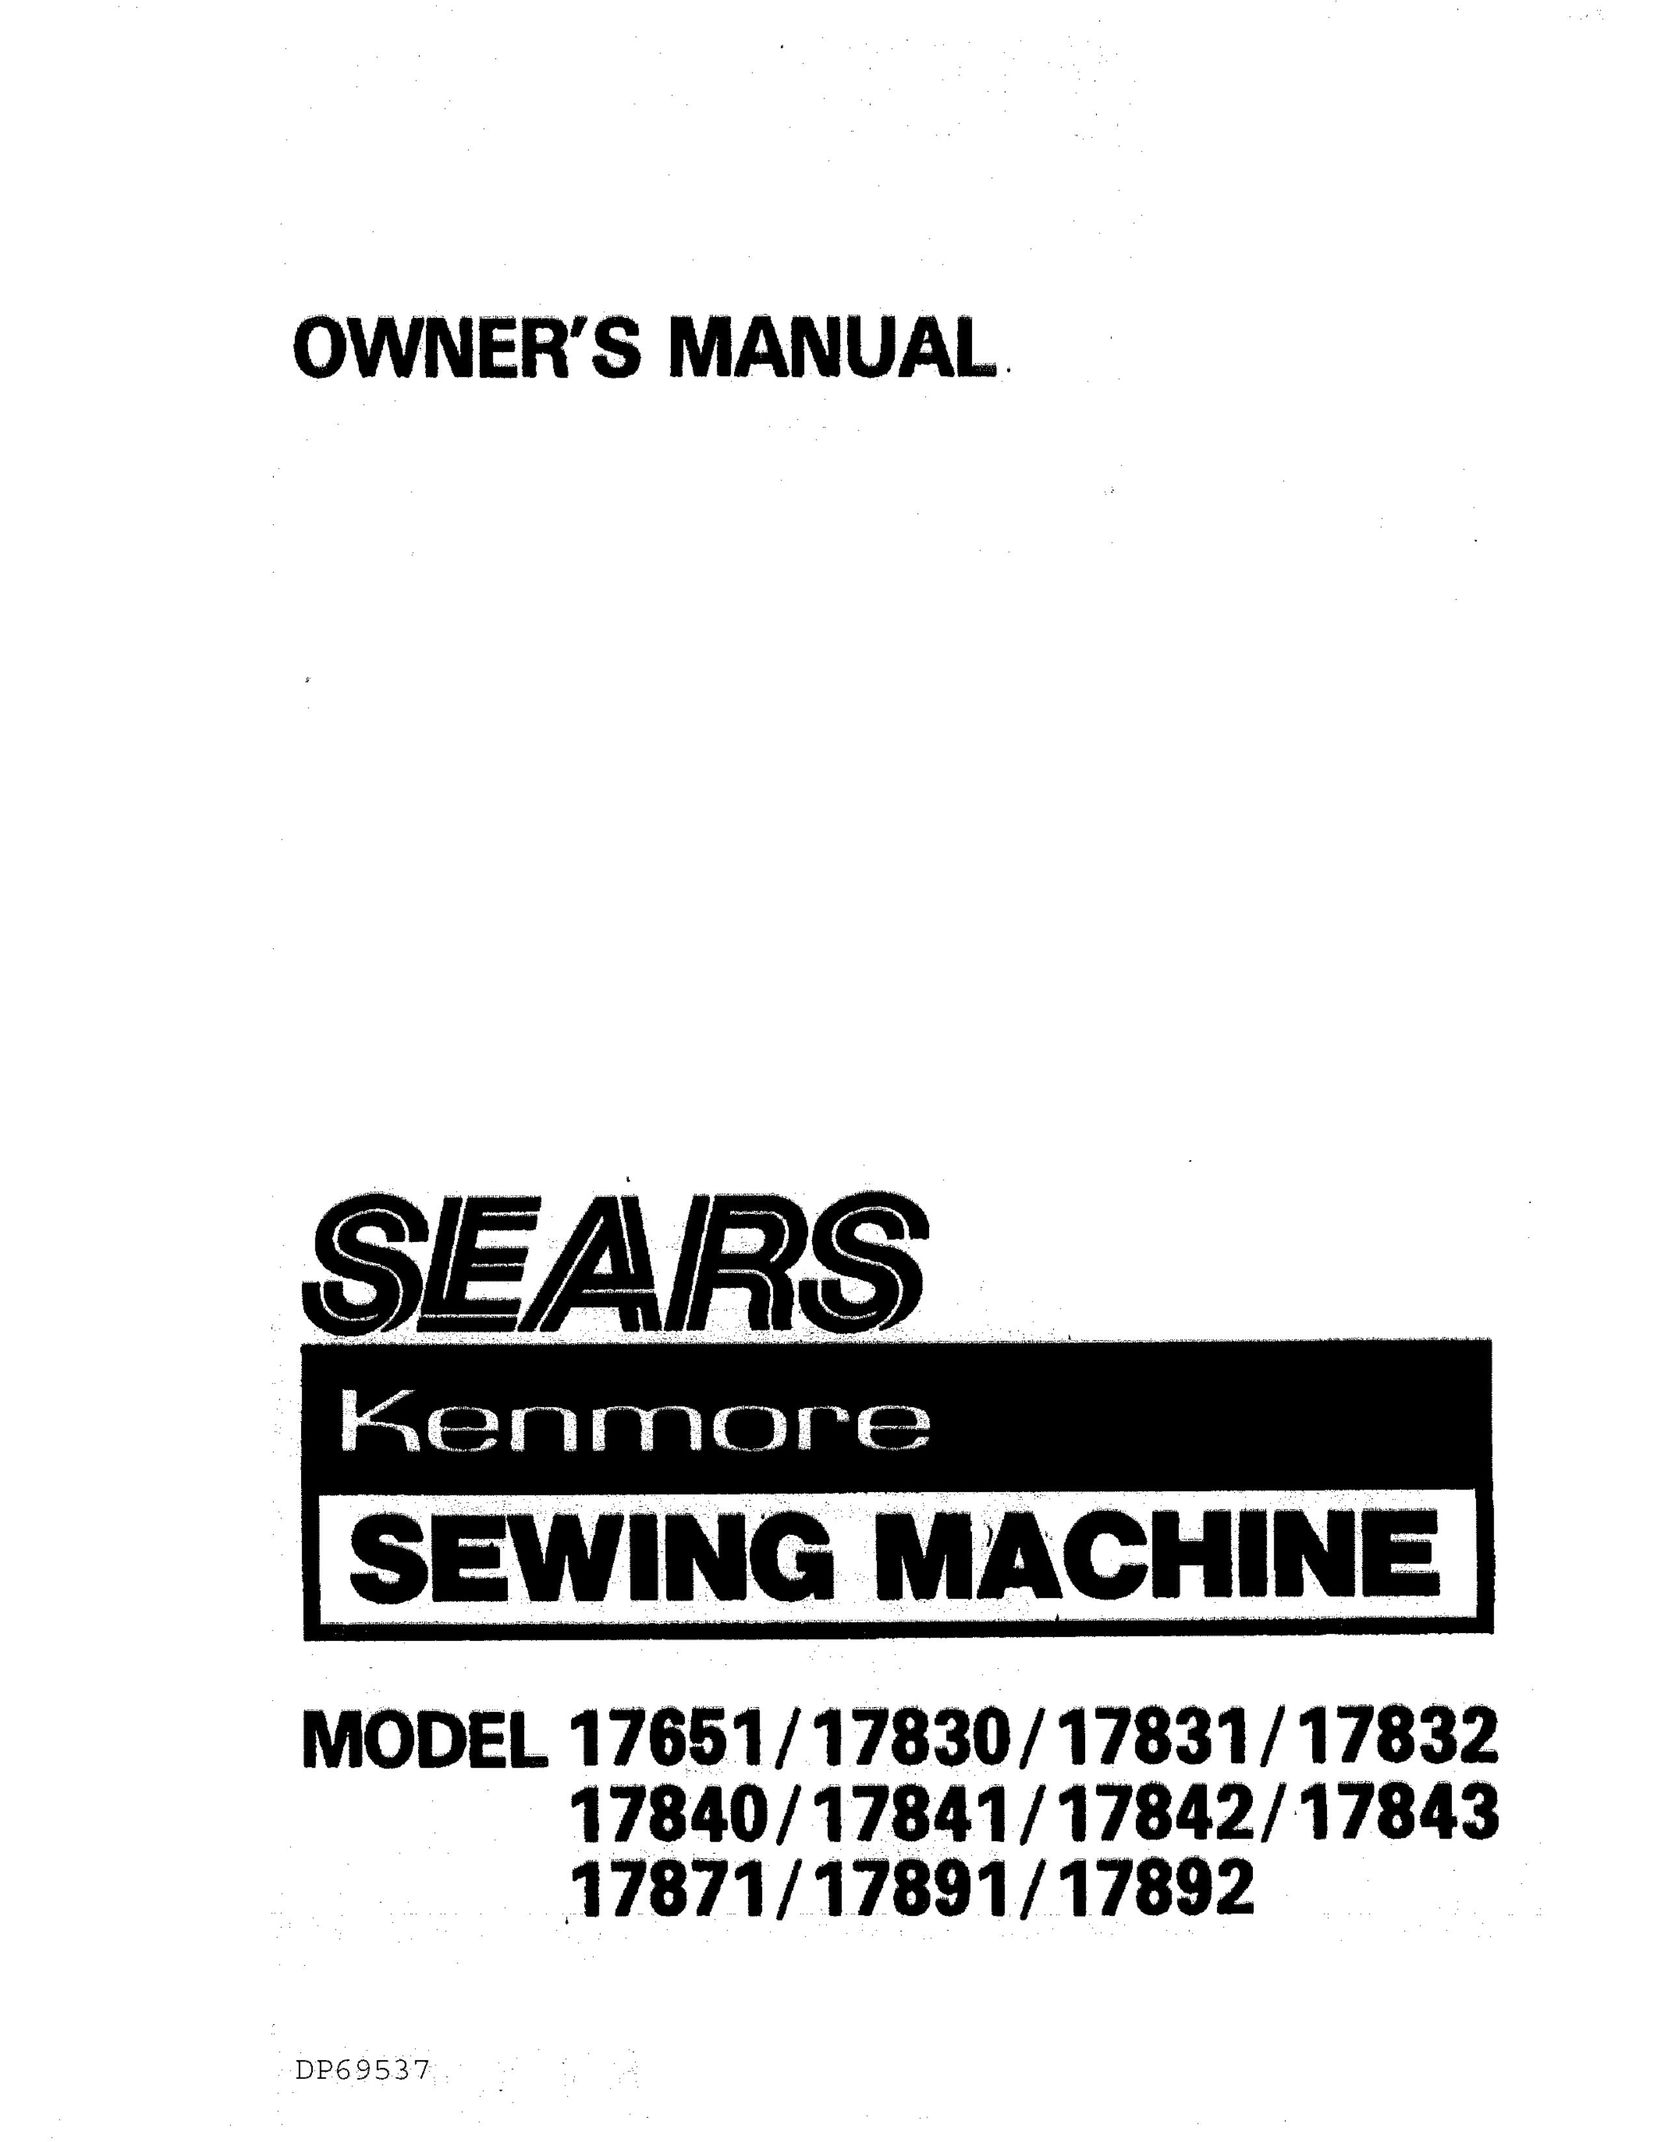 Sears 17843 Sewing Machine User Manual